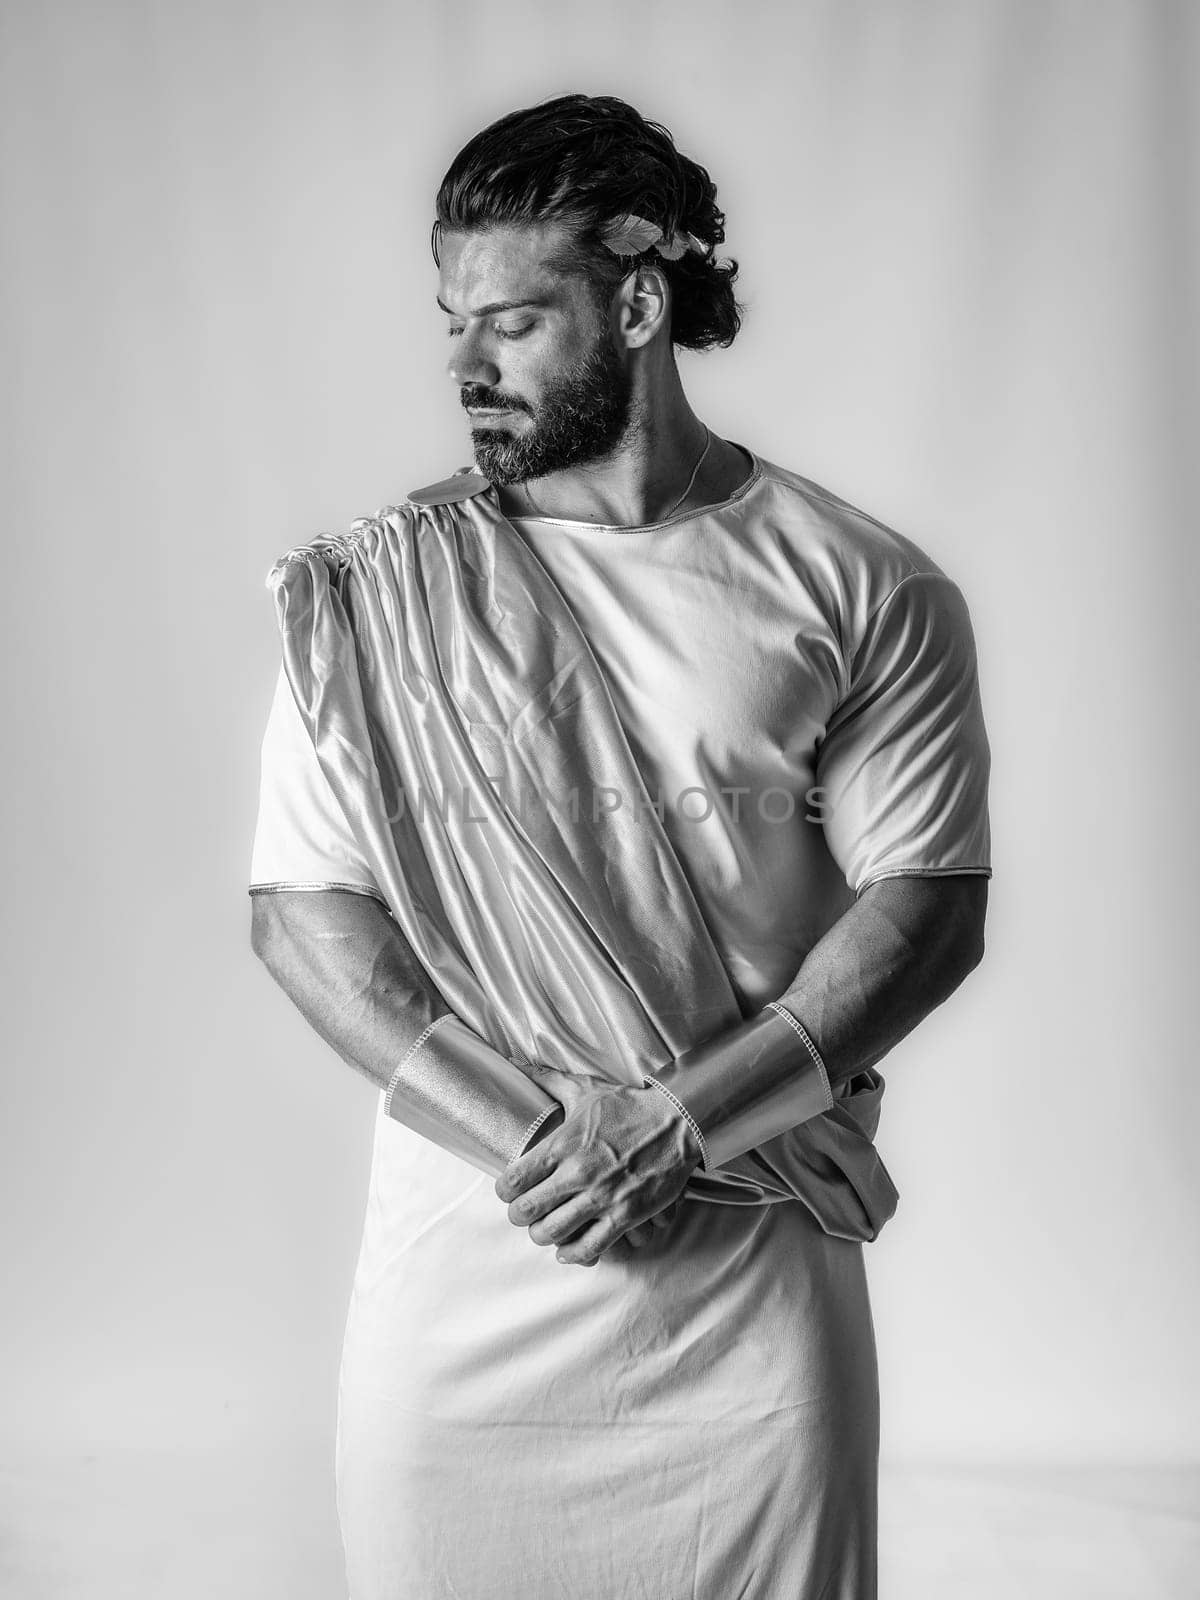 Man as a Greek or Roman god by artofphoto